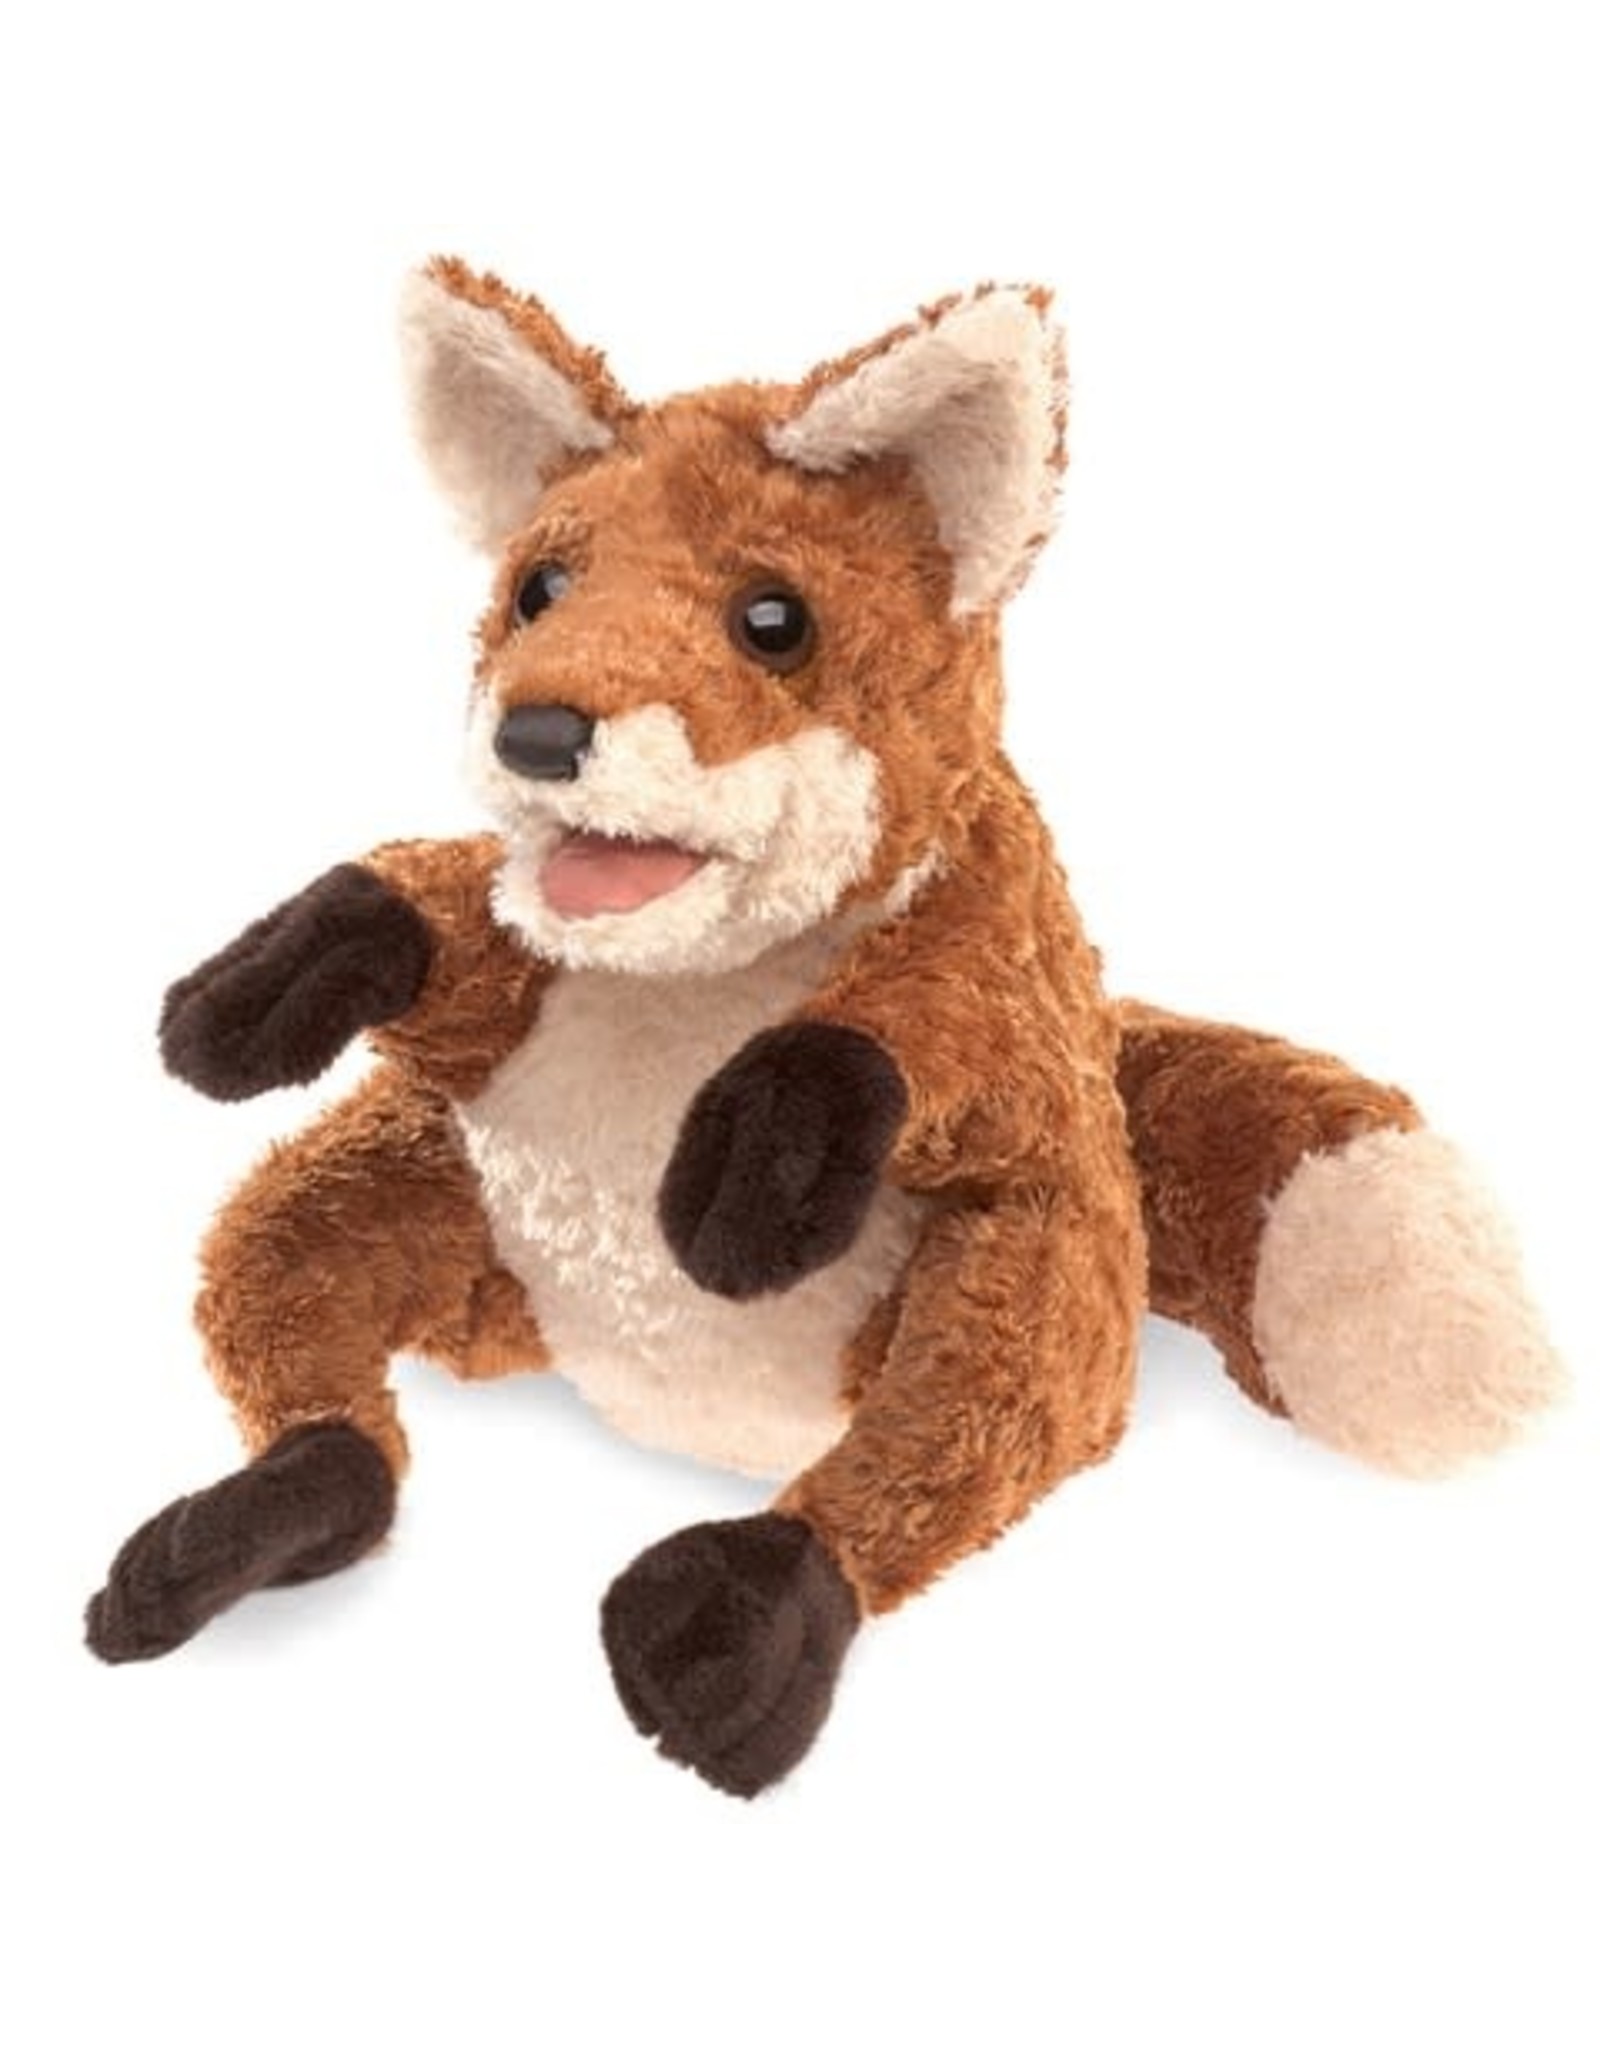 Folkmanis Folkmanis Crafty Fox Puppet